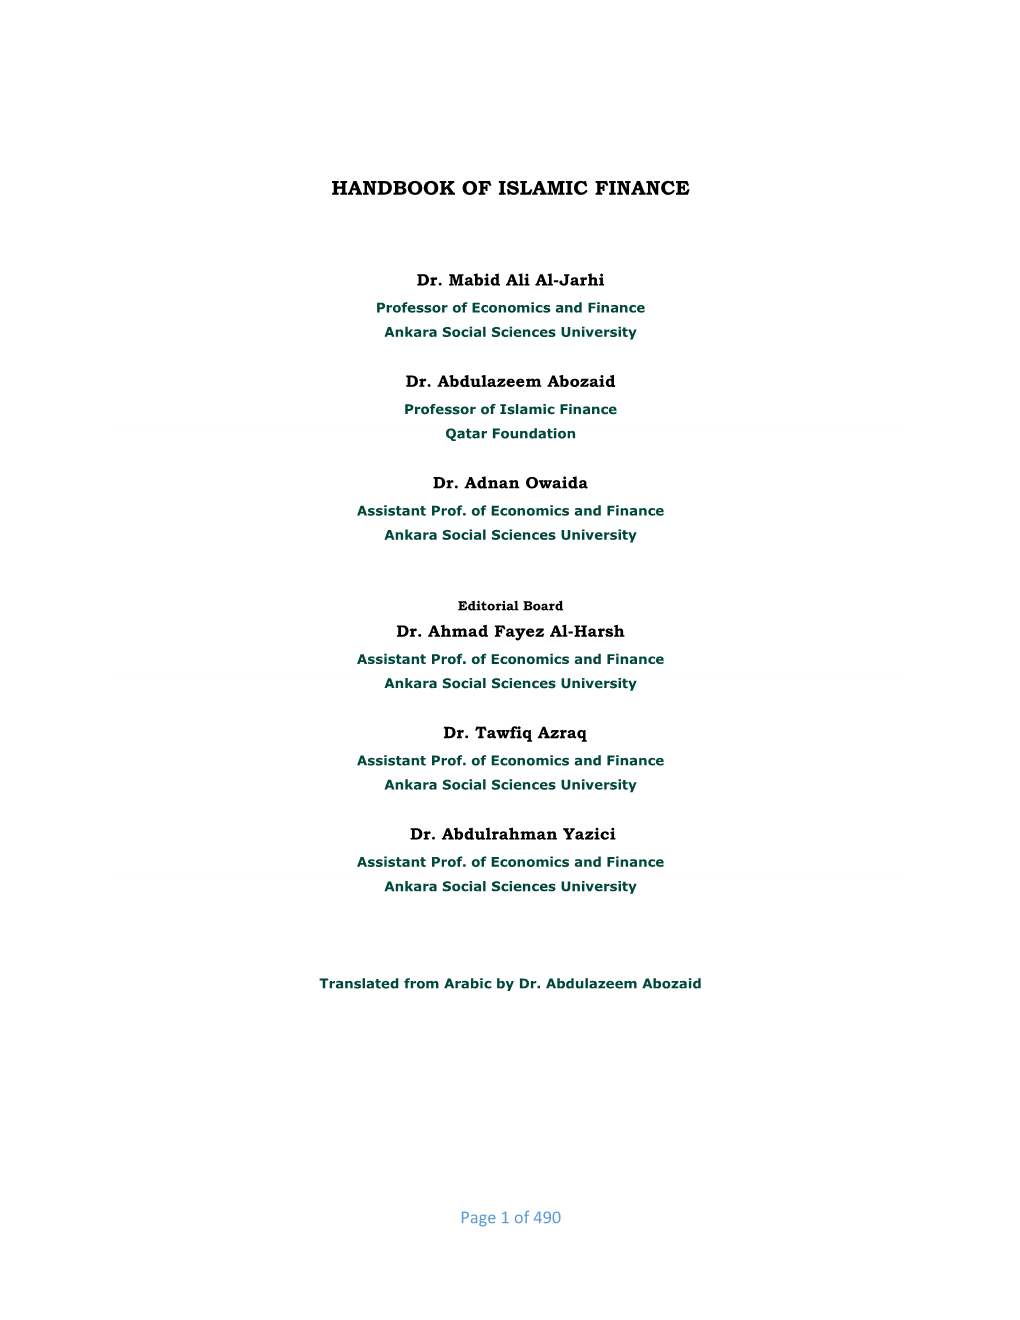 Handbook of Islamic Finance